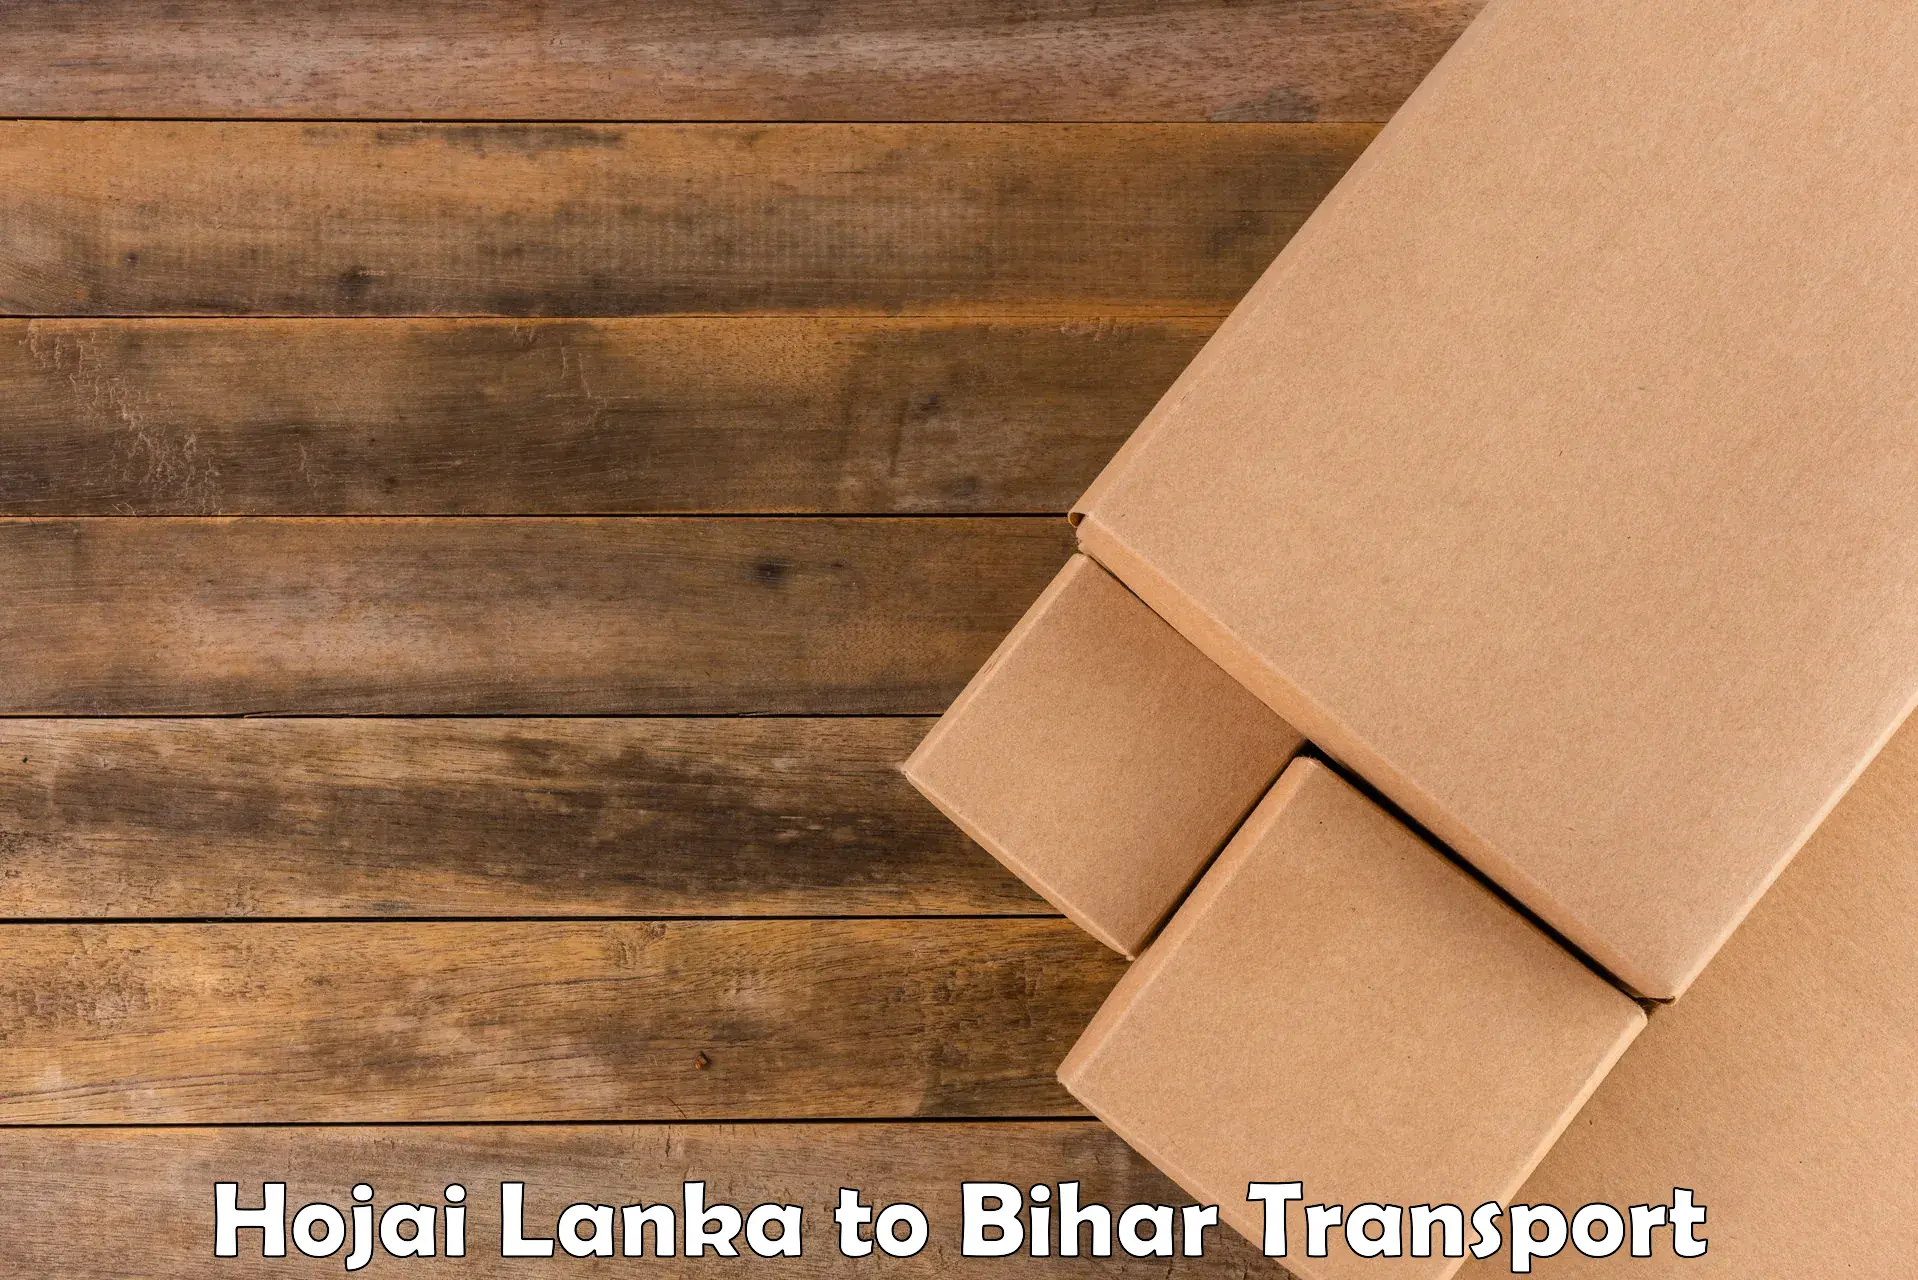 Bike transport service Hojai Lanka to Sonbarsa